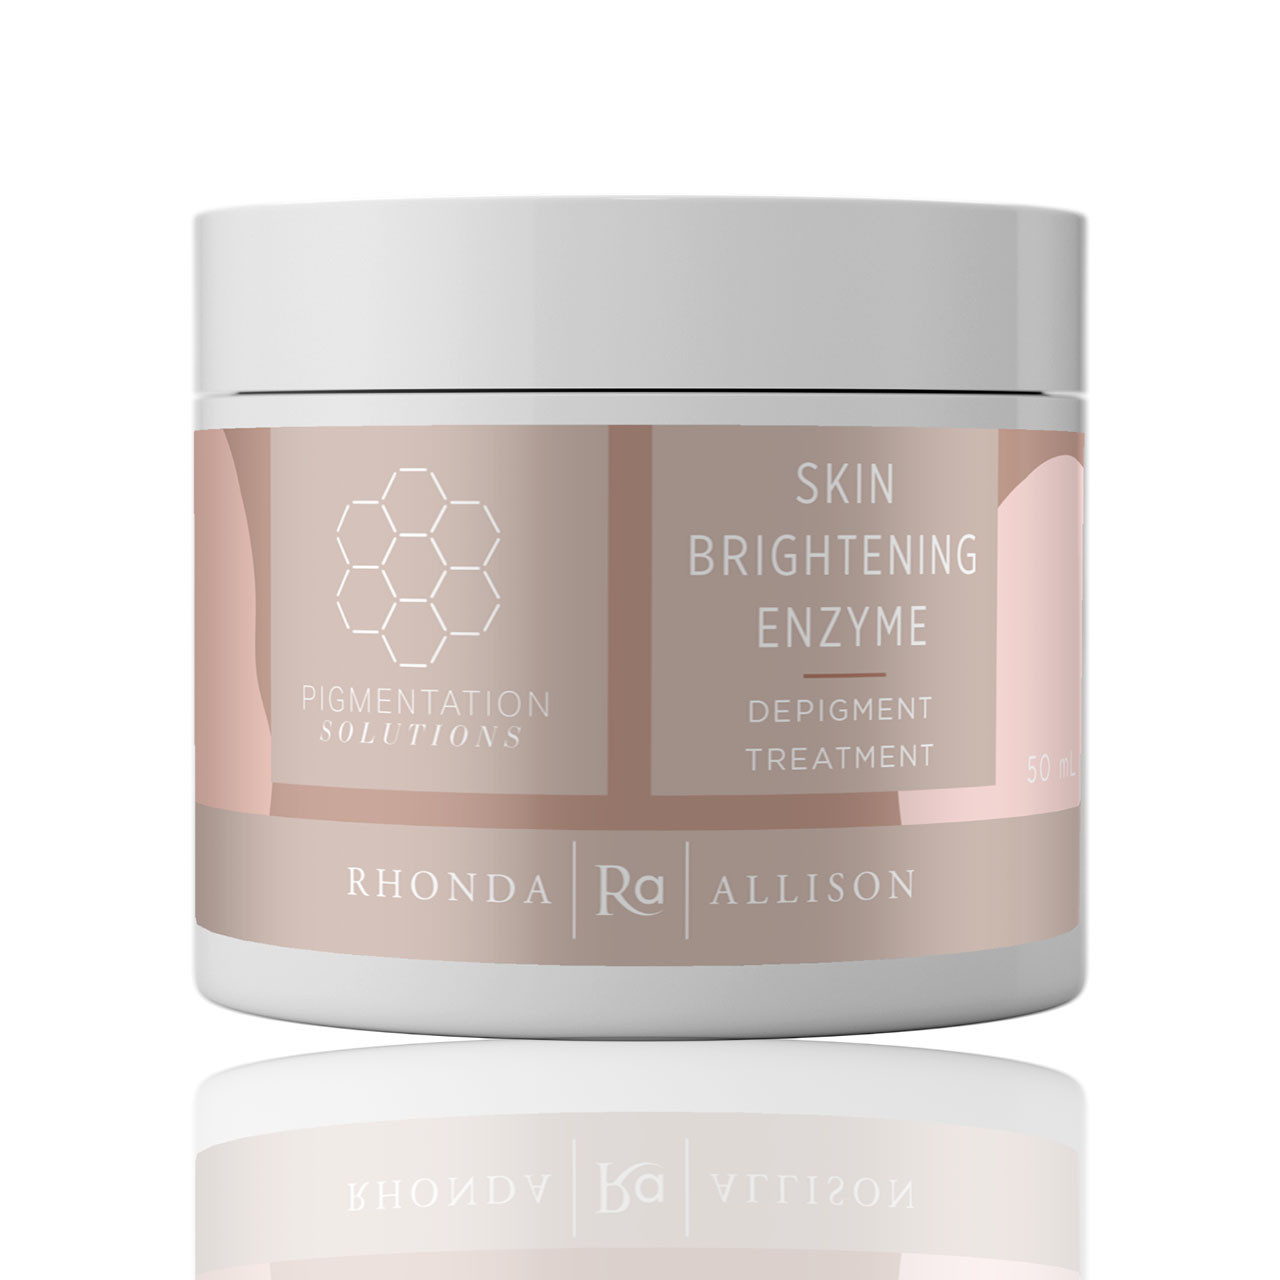 Rhonda Allison Skin Brightening Enzyme - 50ml. (RA03303)